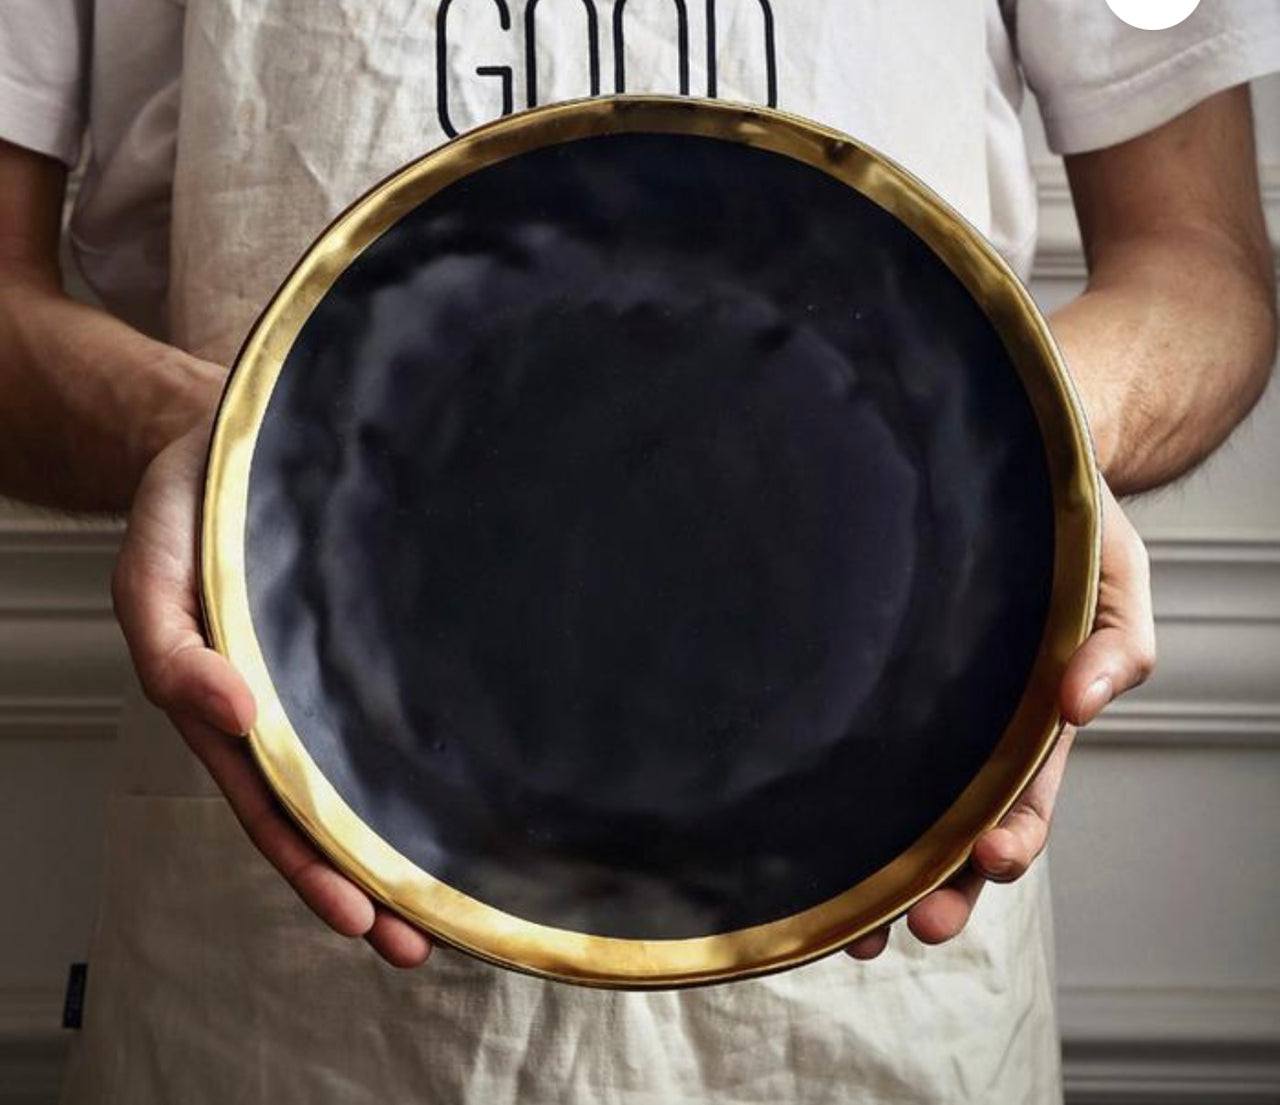 Matt Black & Gold Edges Porcelain Plates